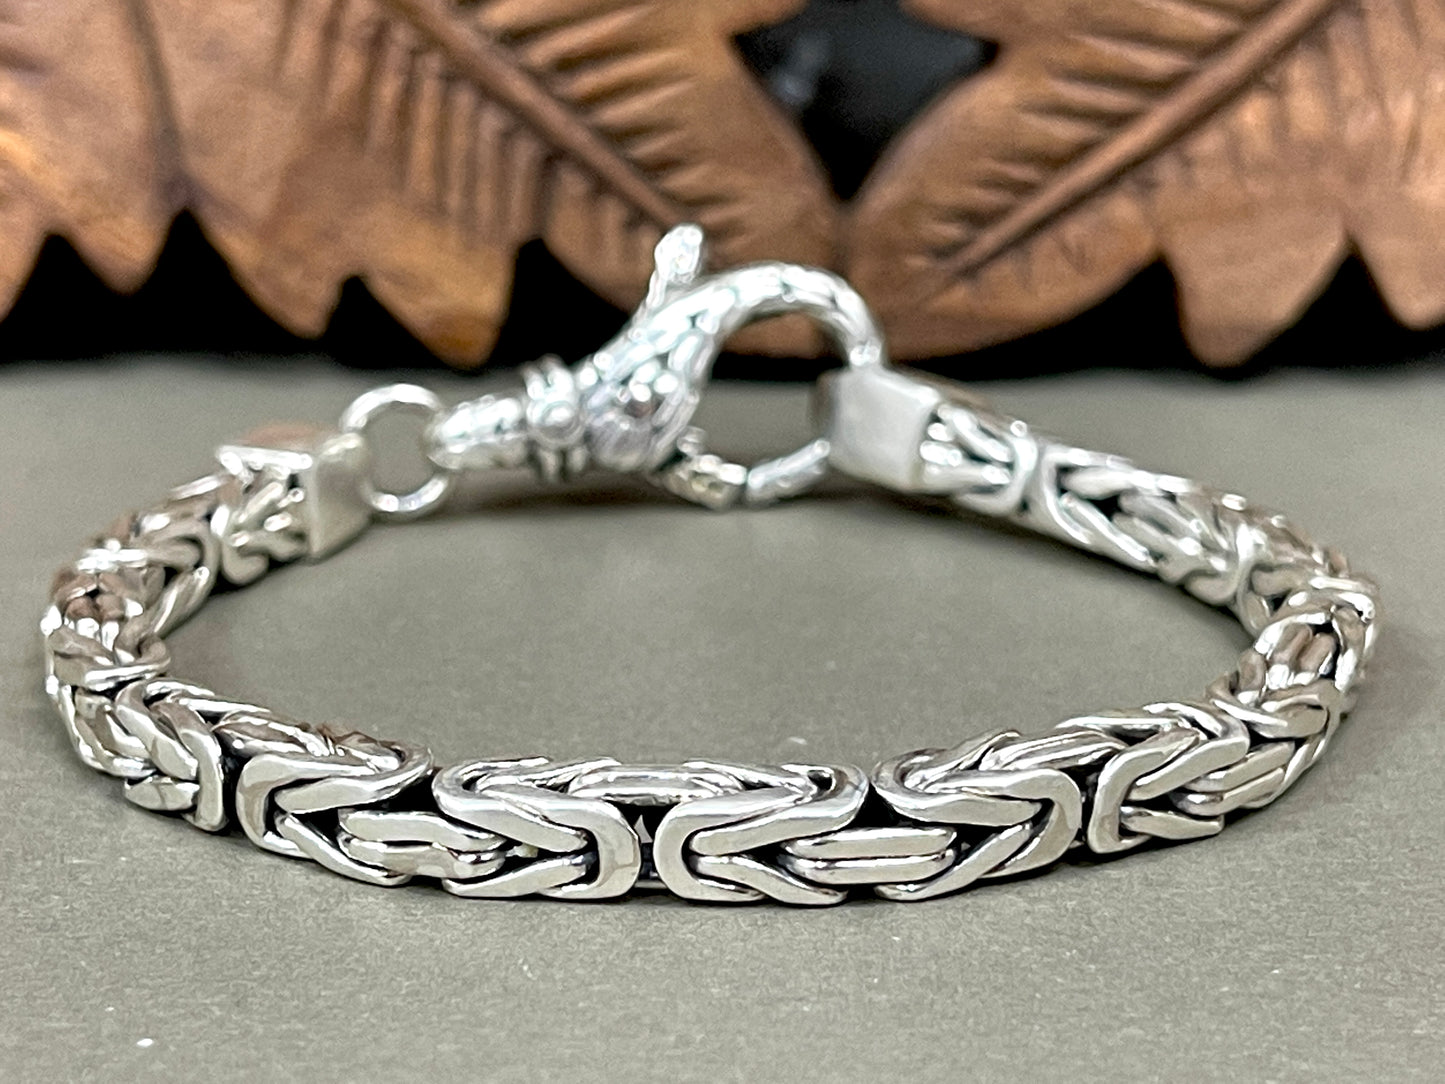 Byzantine Chain Bracelets